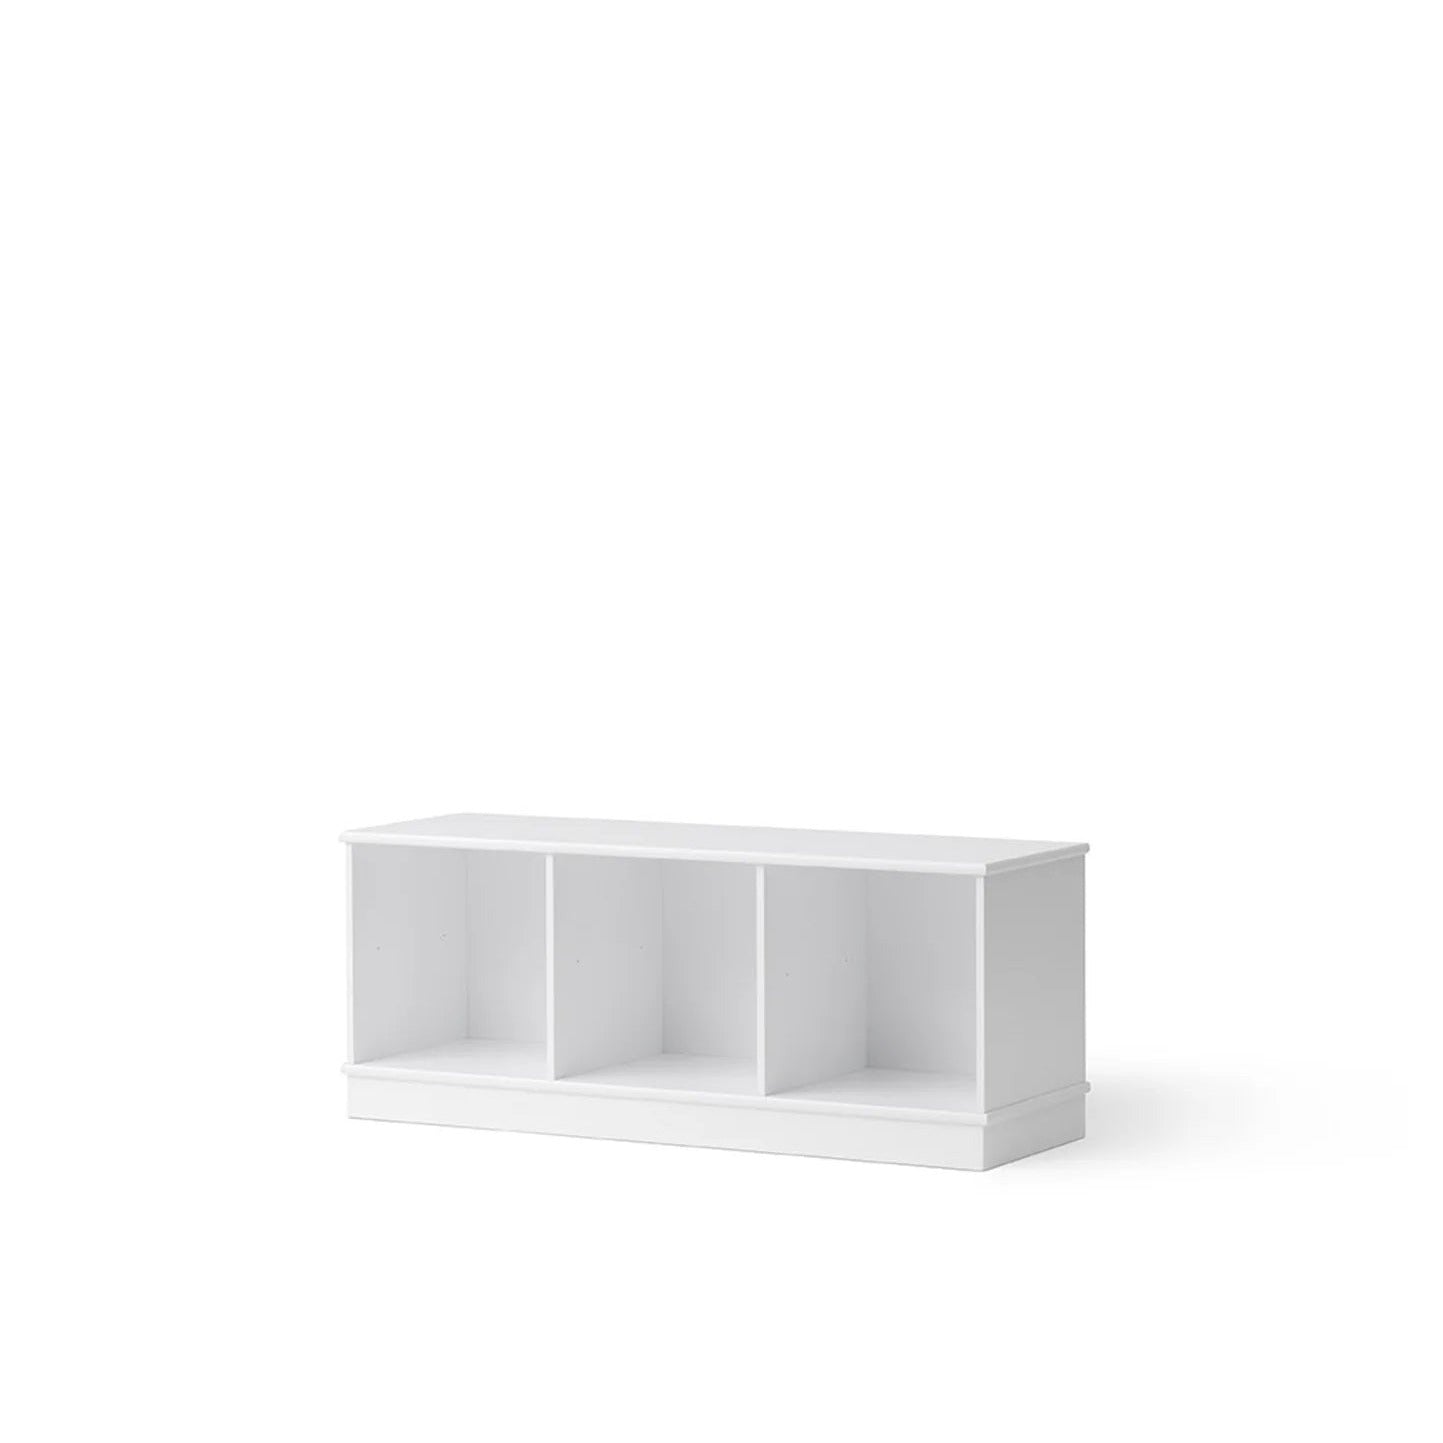 Oliver Furniture Wood Shelving Unit - 3 x 1 With Base